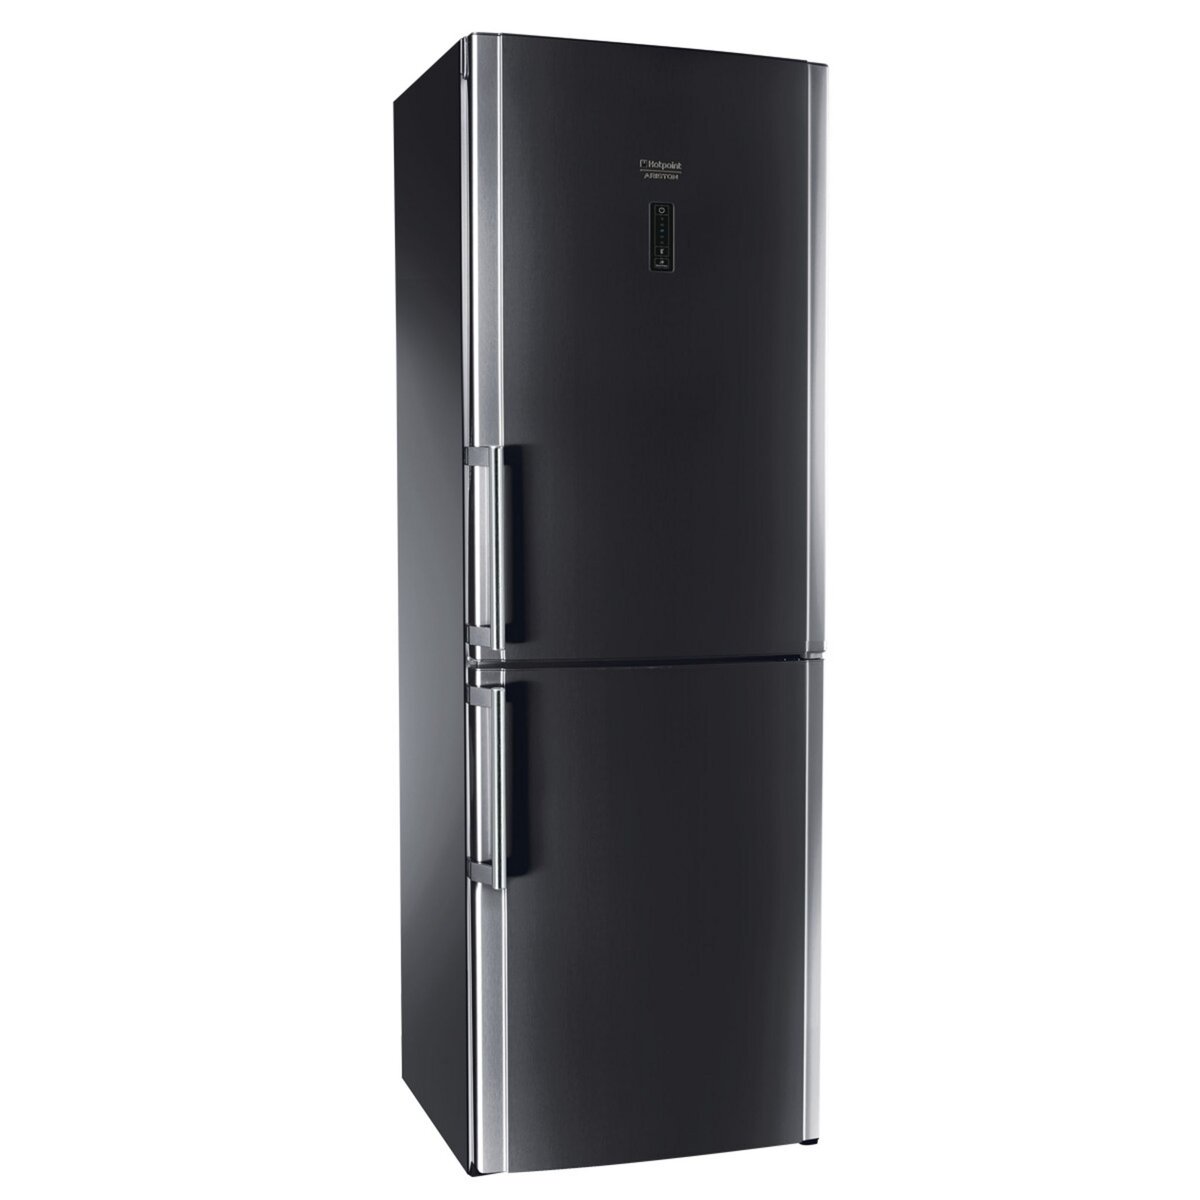 Hotpoint Réfrigérateur combiné EBOH 18243 F SL, 283 L, No frost